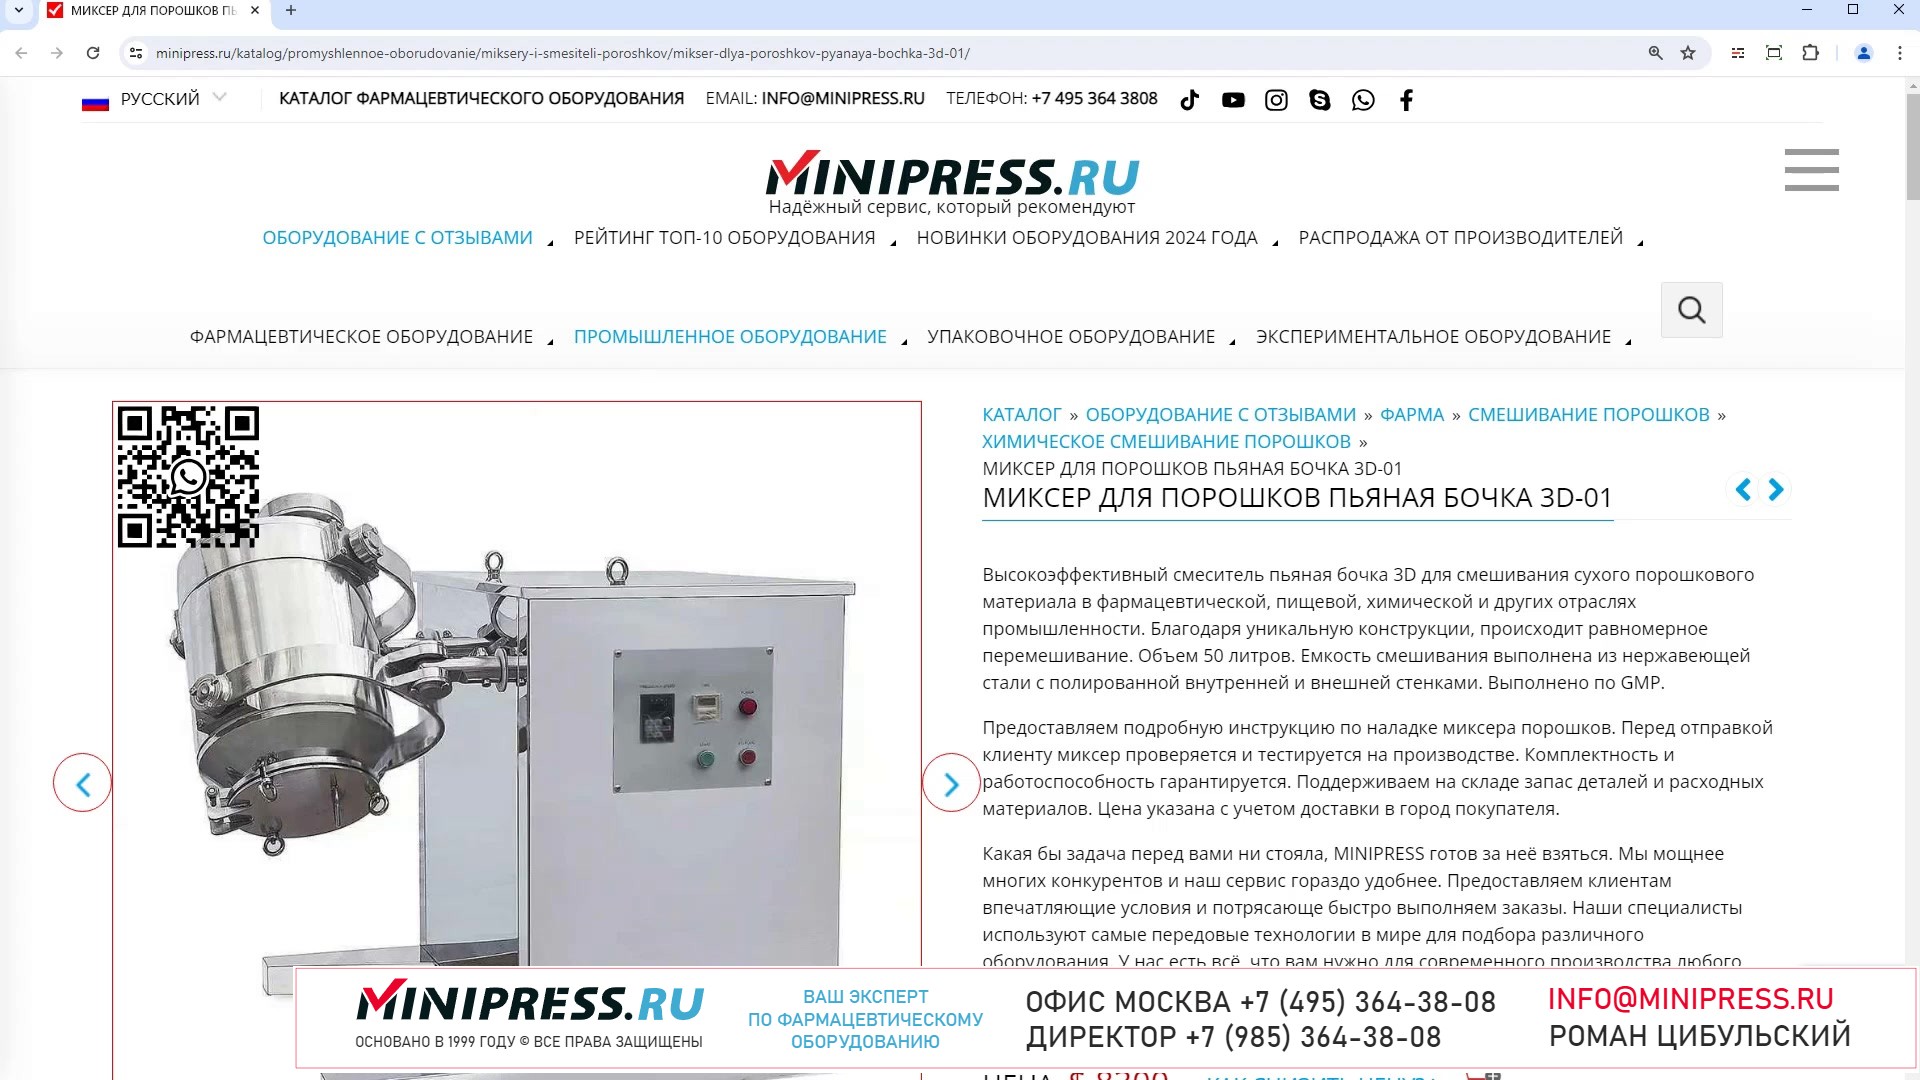 Minipress.ru Миксер для порошков пьяная бочка 3D-01